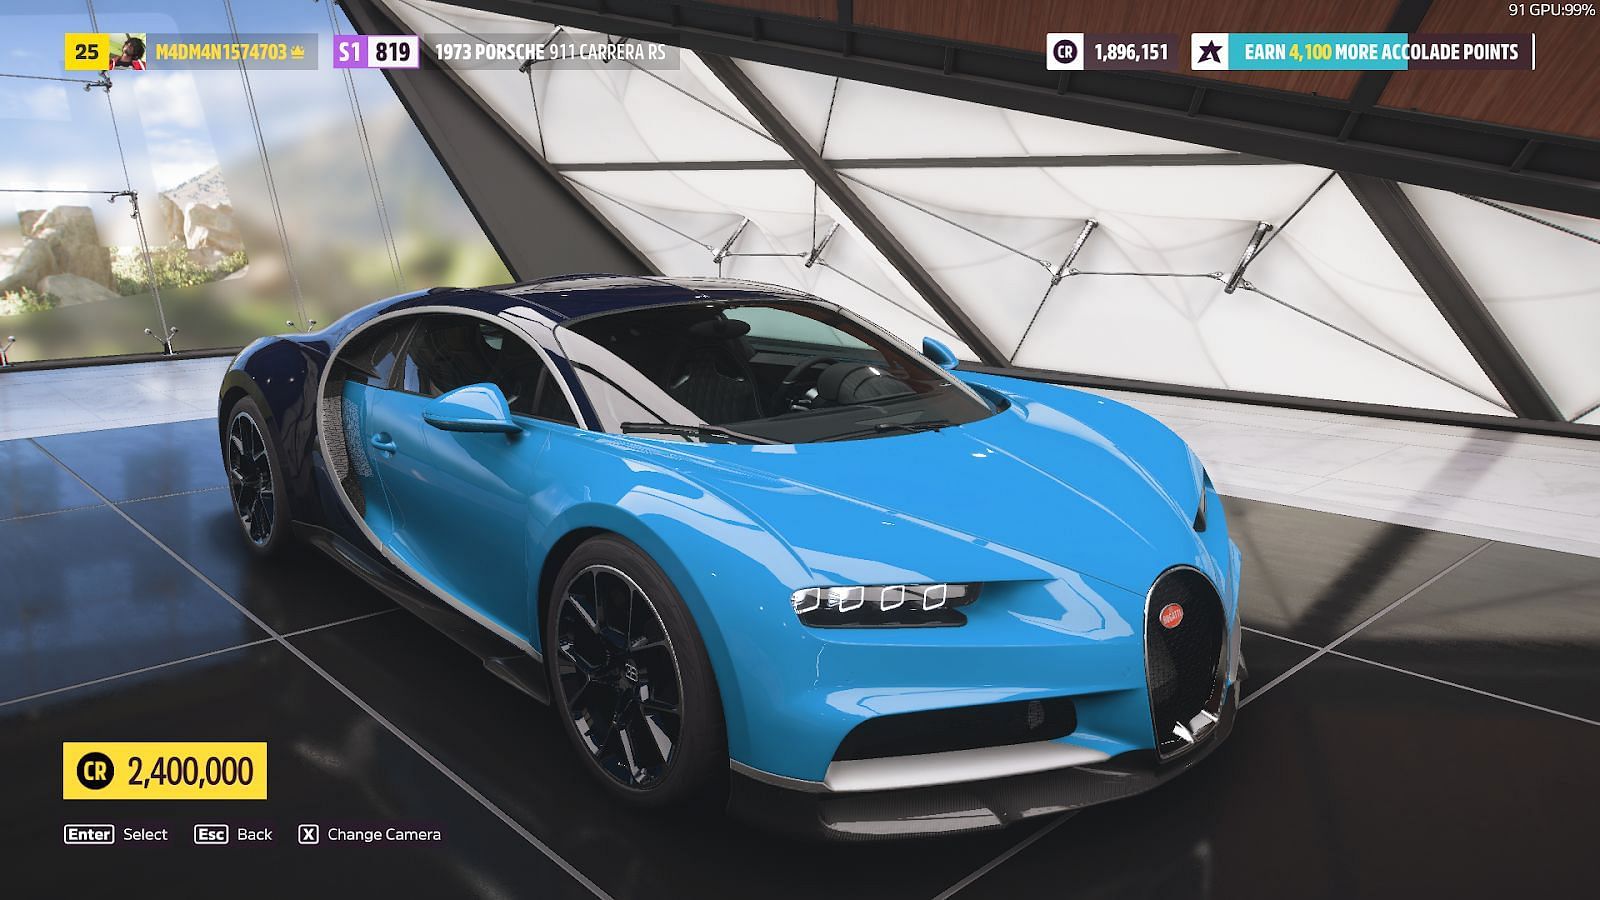 Chiron is slightly faster than Veyron (Image via Forza Horizon 5)